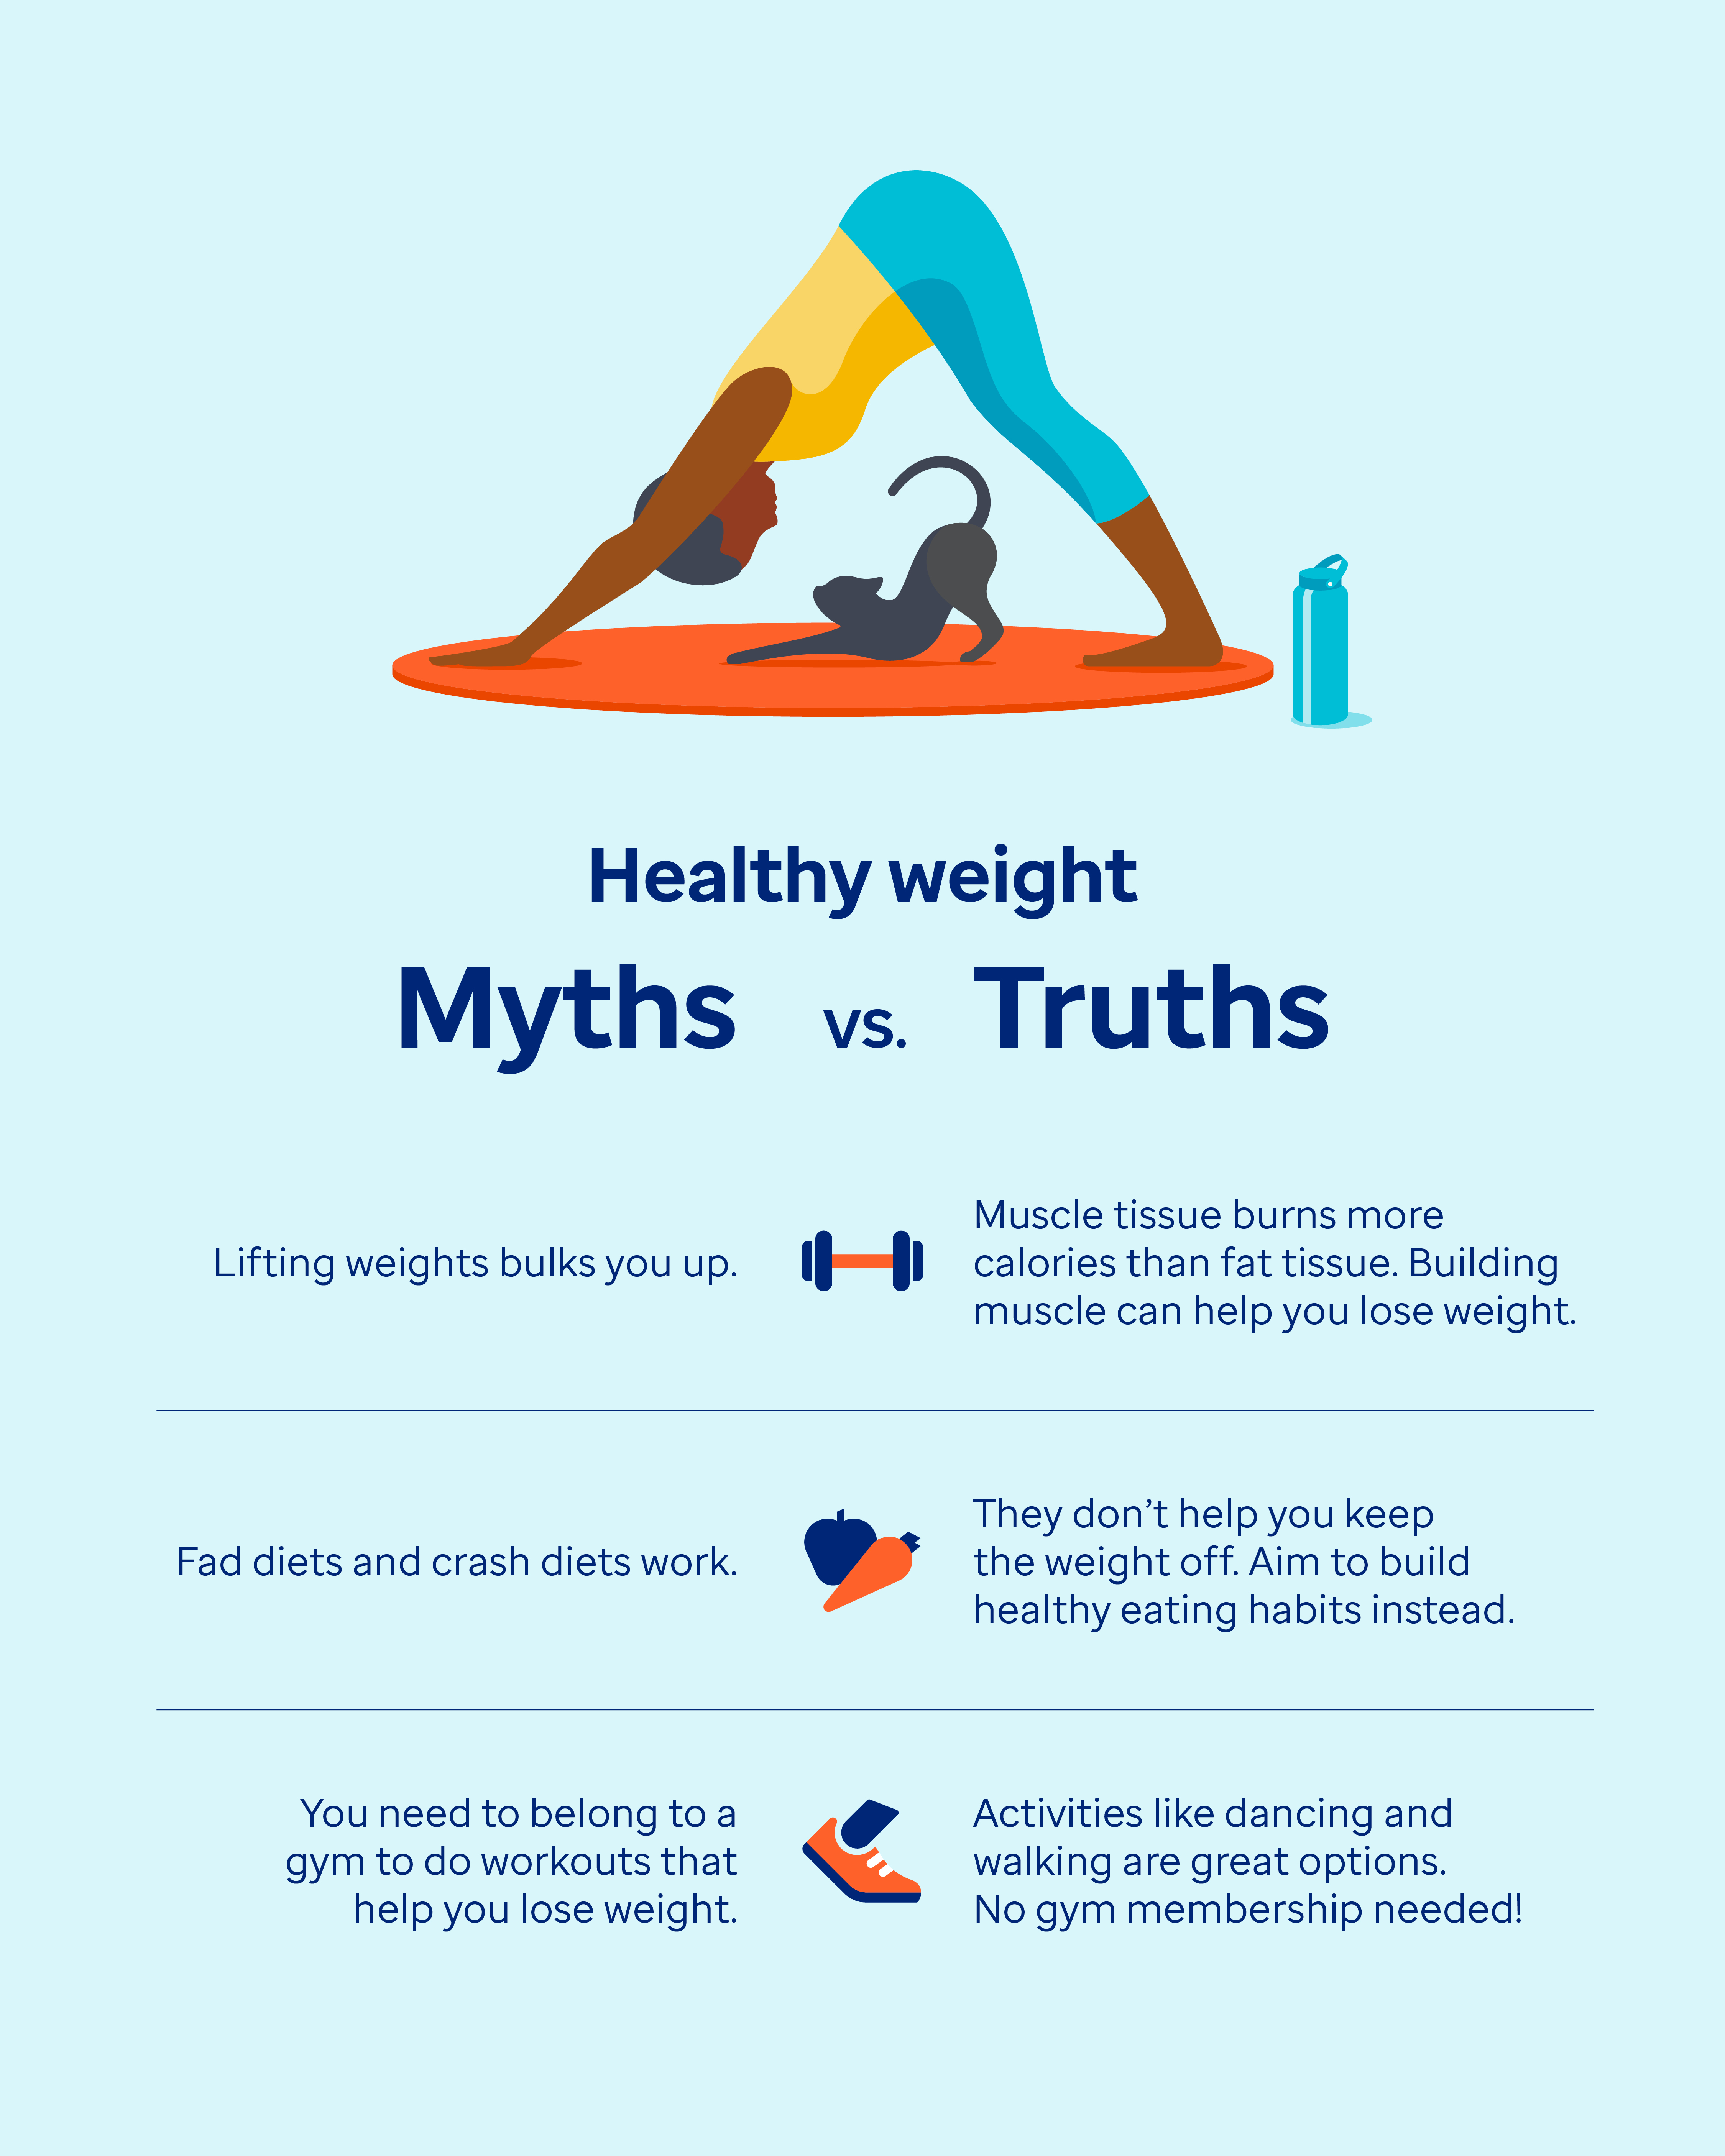 Healthy weight myths